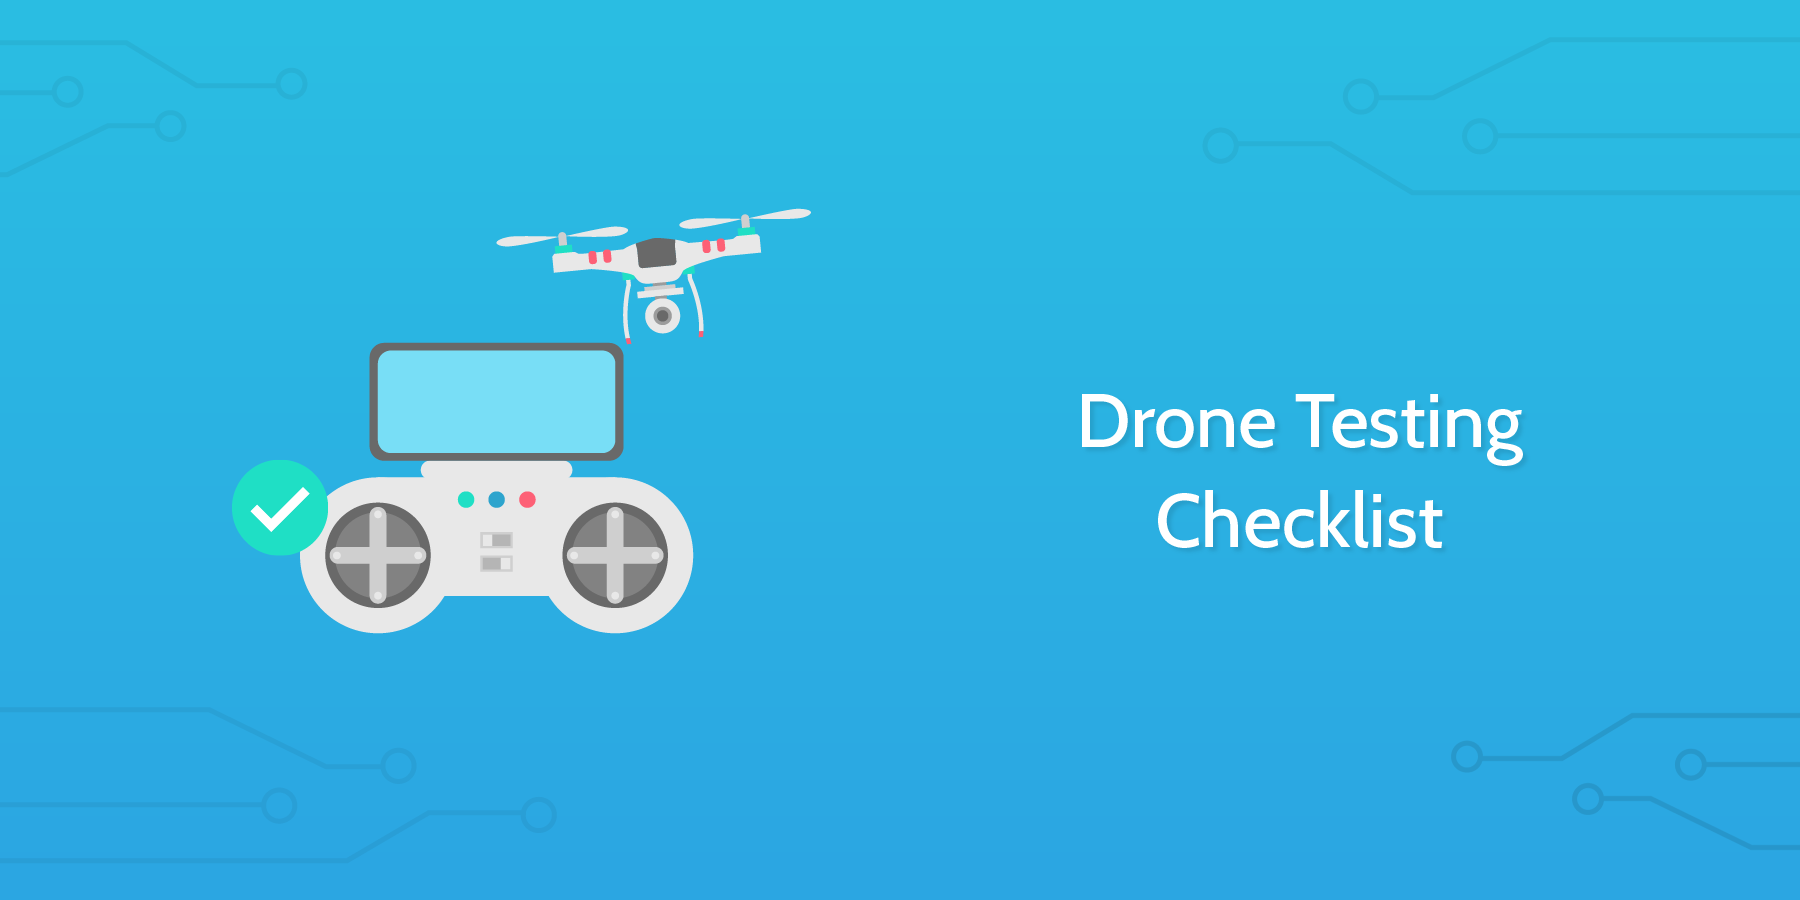  Drone Testing Checklist